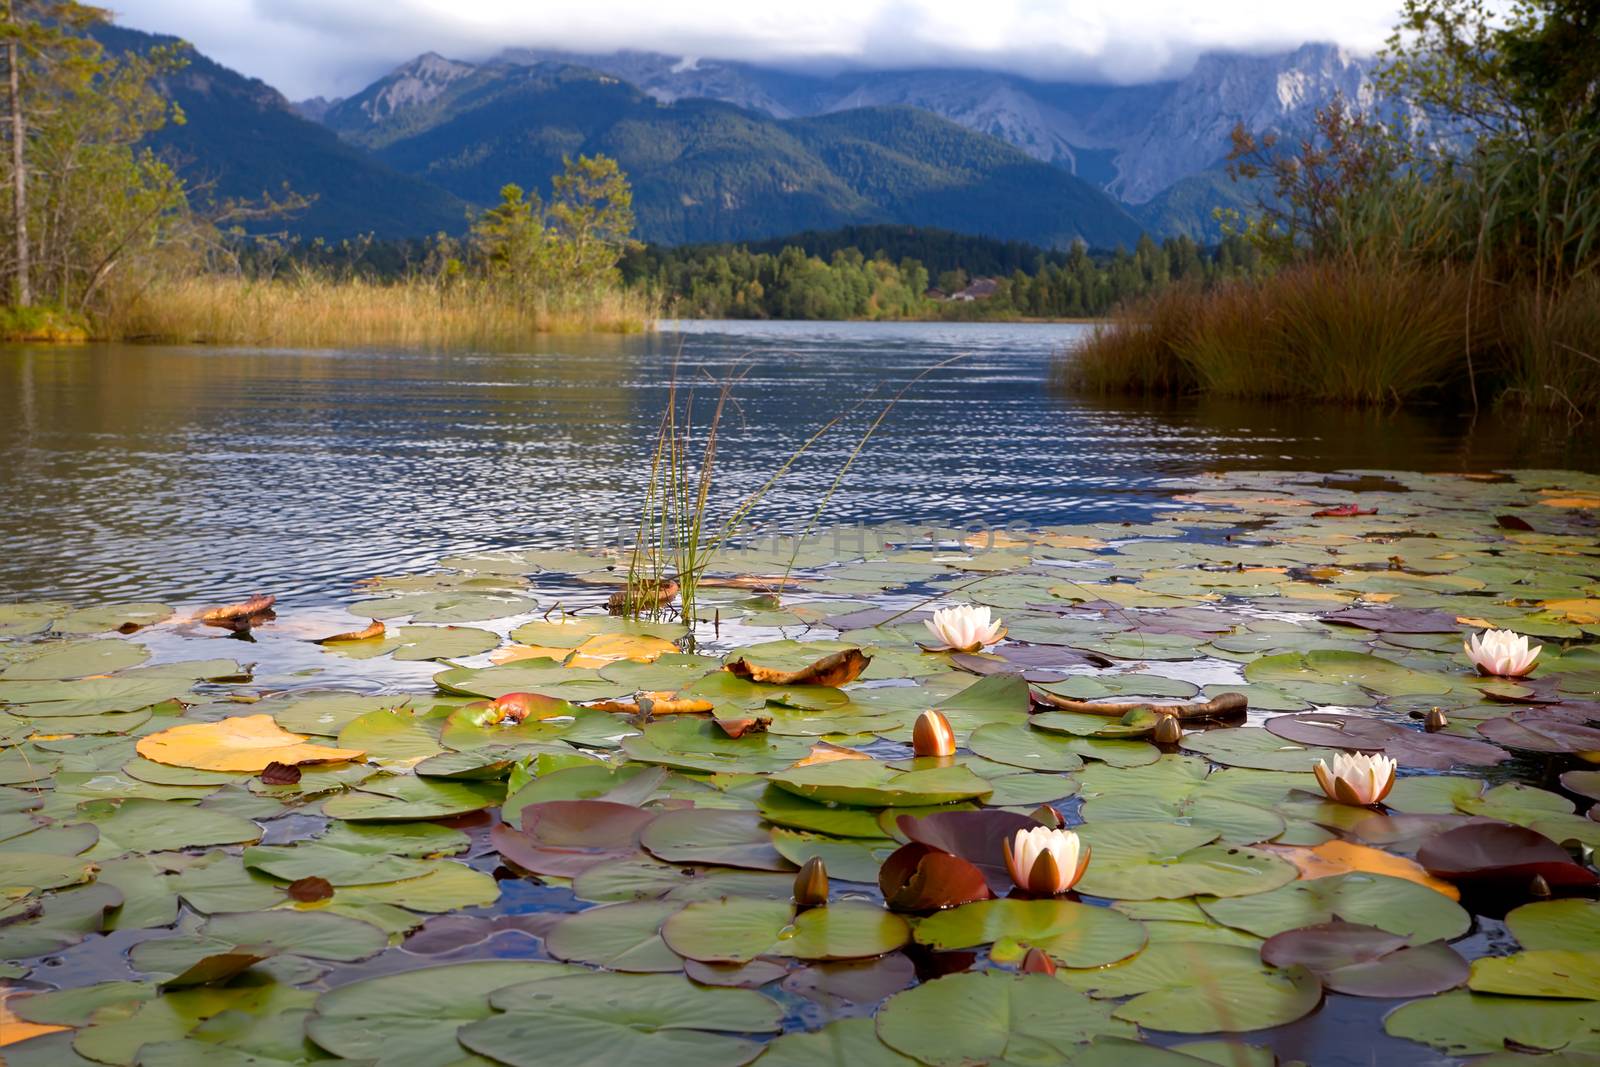 water lily flowers on Barmsee lake, Bavaria, Germany